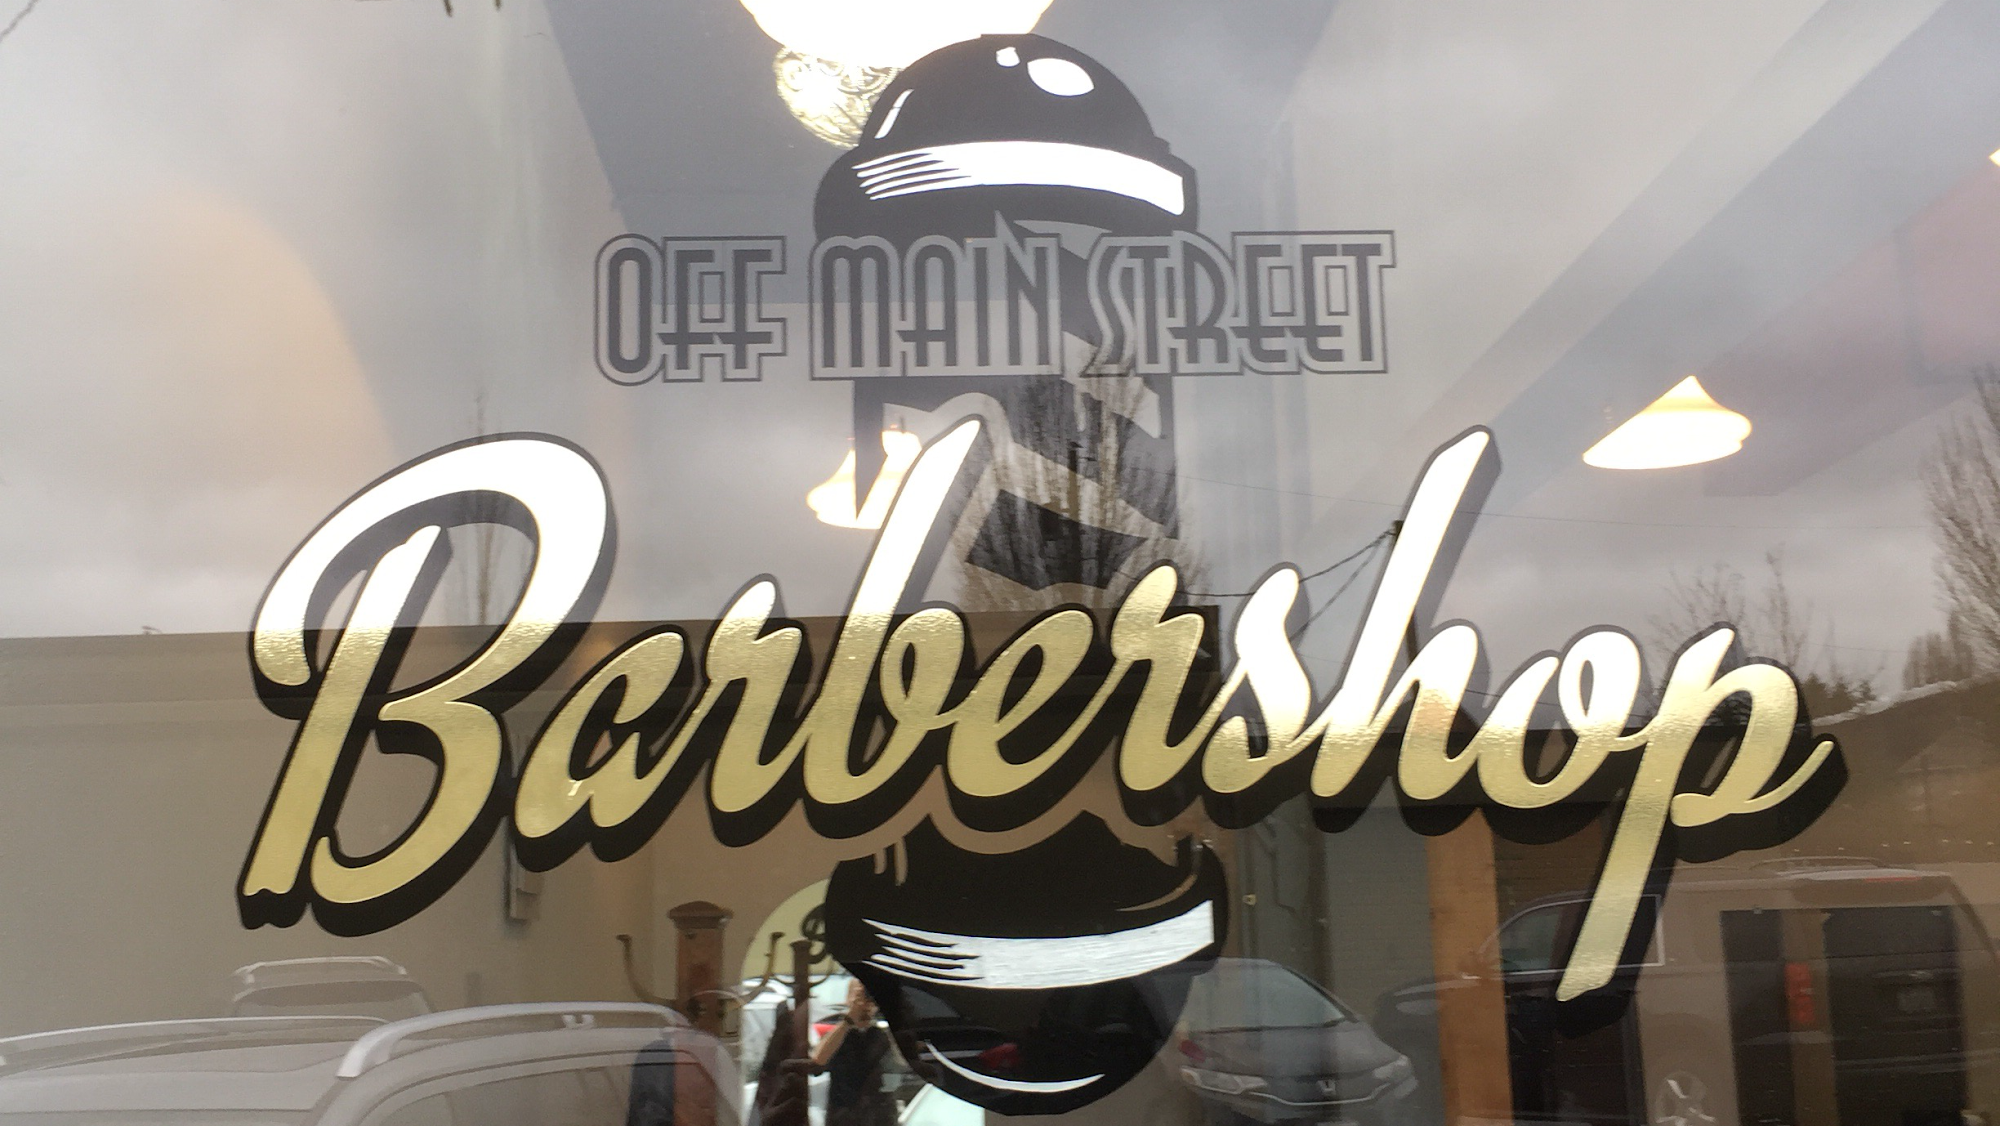 Off Main Street Barbershop